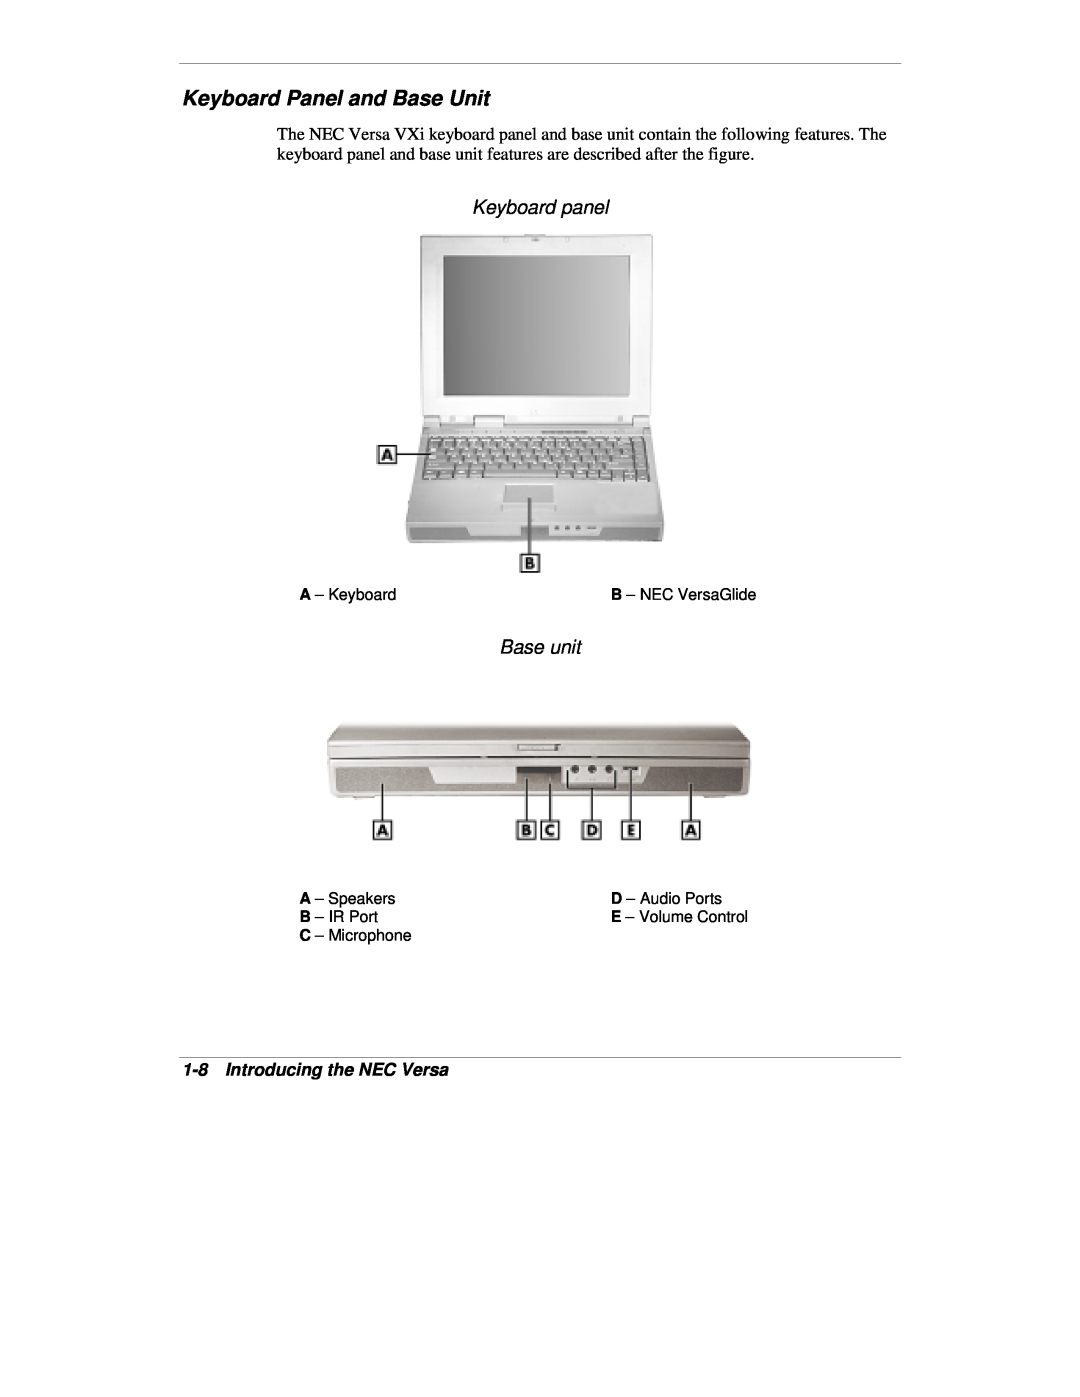 NEC VXi Keyboard panel, Base unit, 1-8Introducing the NEC Versa, A – Keyboard, A – Speakers, D – Audio Ports, B – IR Port 